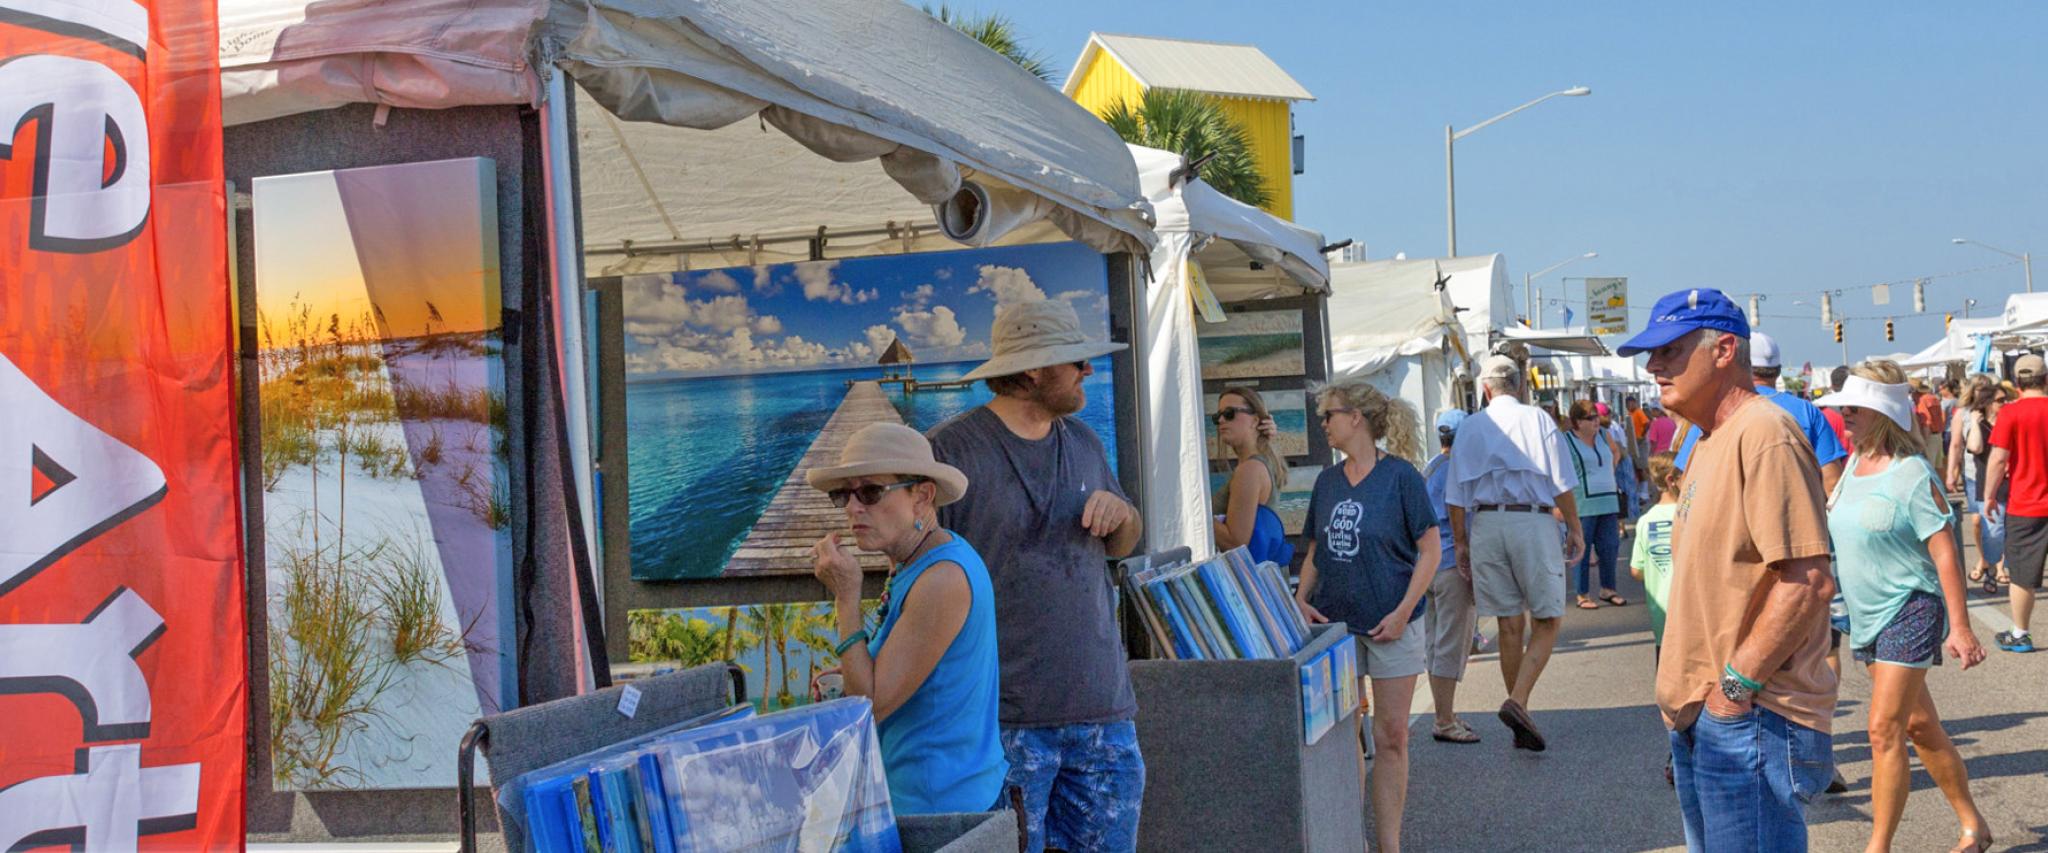 Annual National Shrimp Festival in Gulf Shores